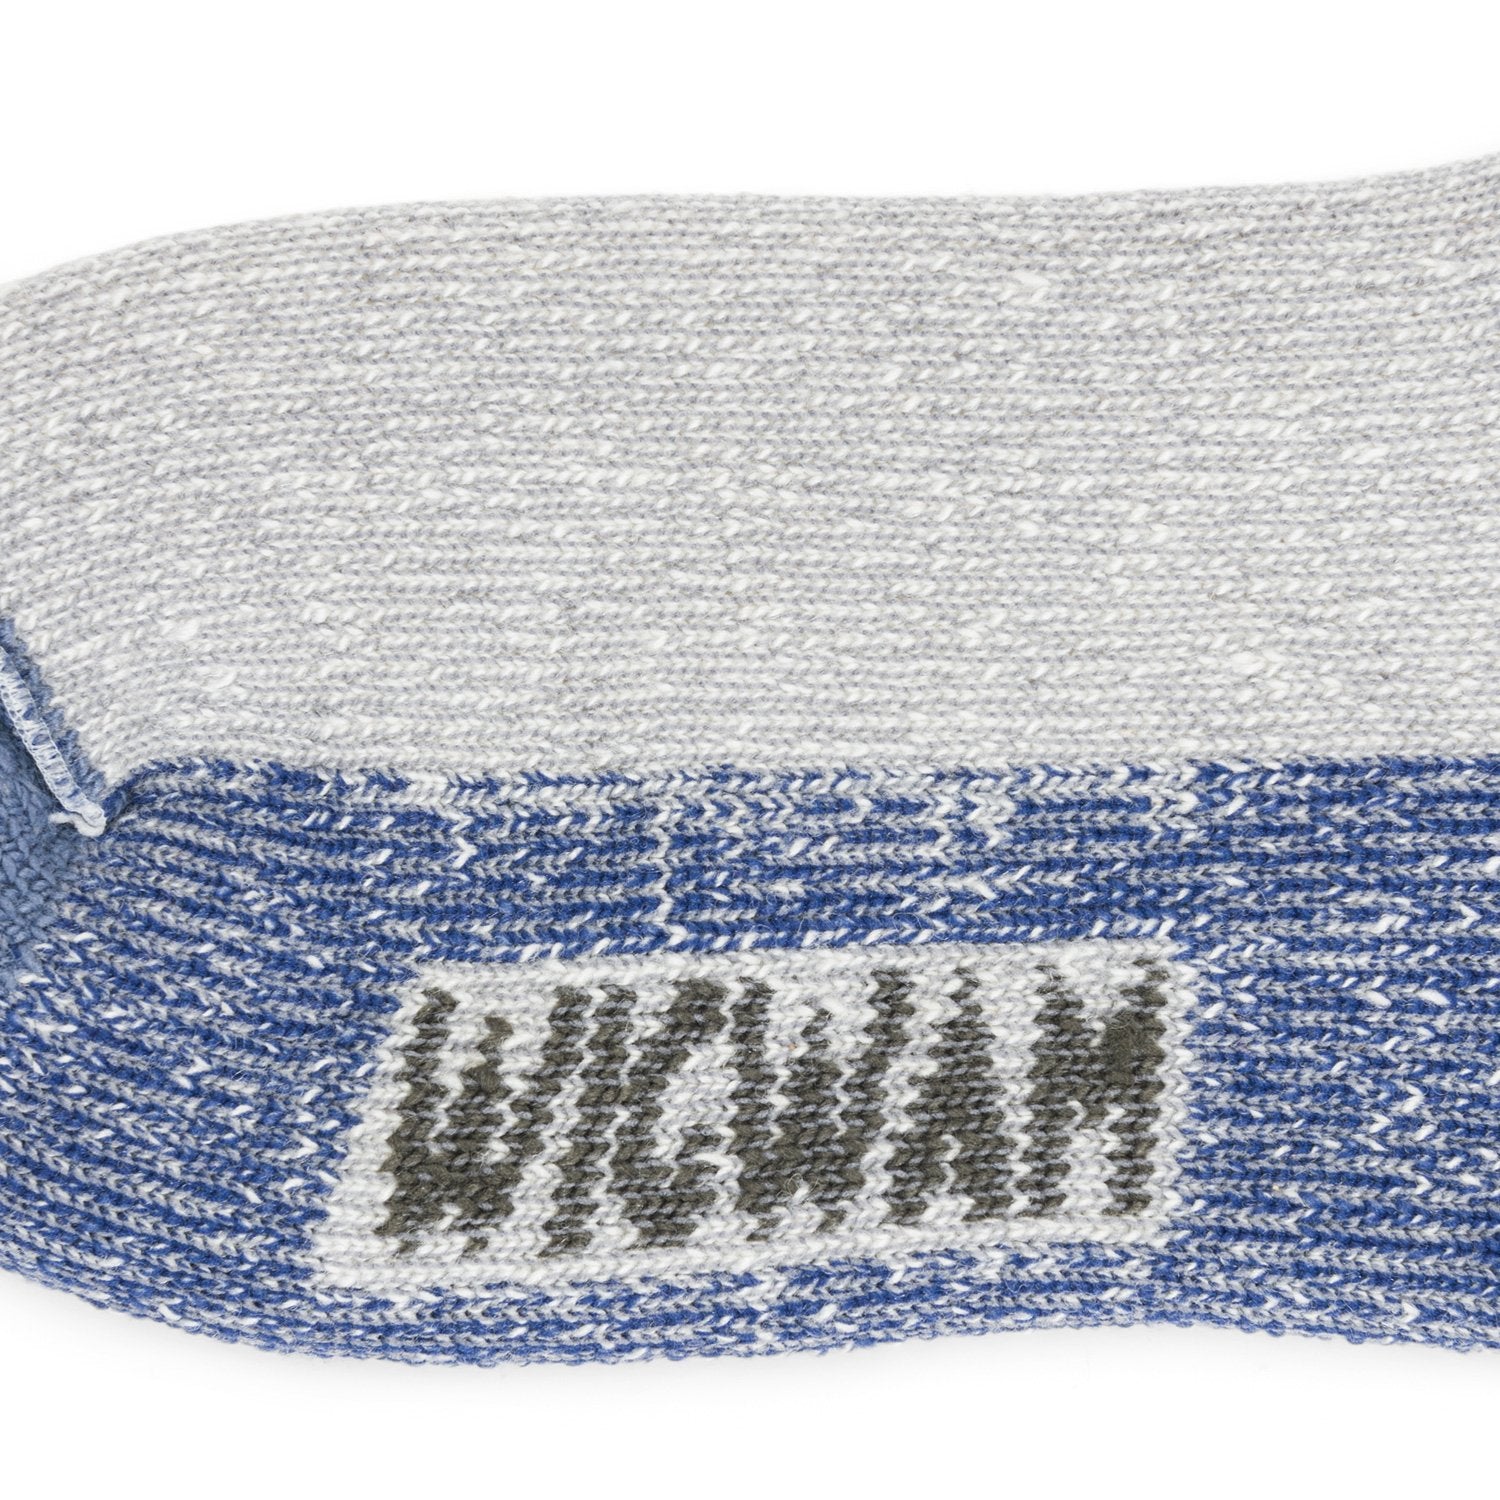 Diabetic Thermal Crew Heavyweight Sock With Wool - Grey/Denim knit-in logo - made in The USA Wigwam Socks